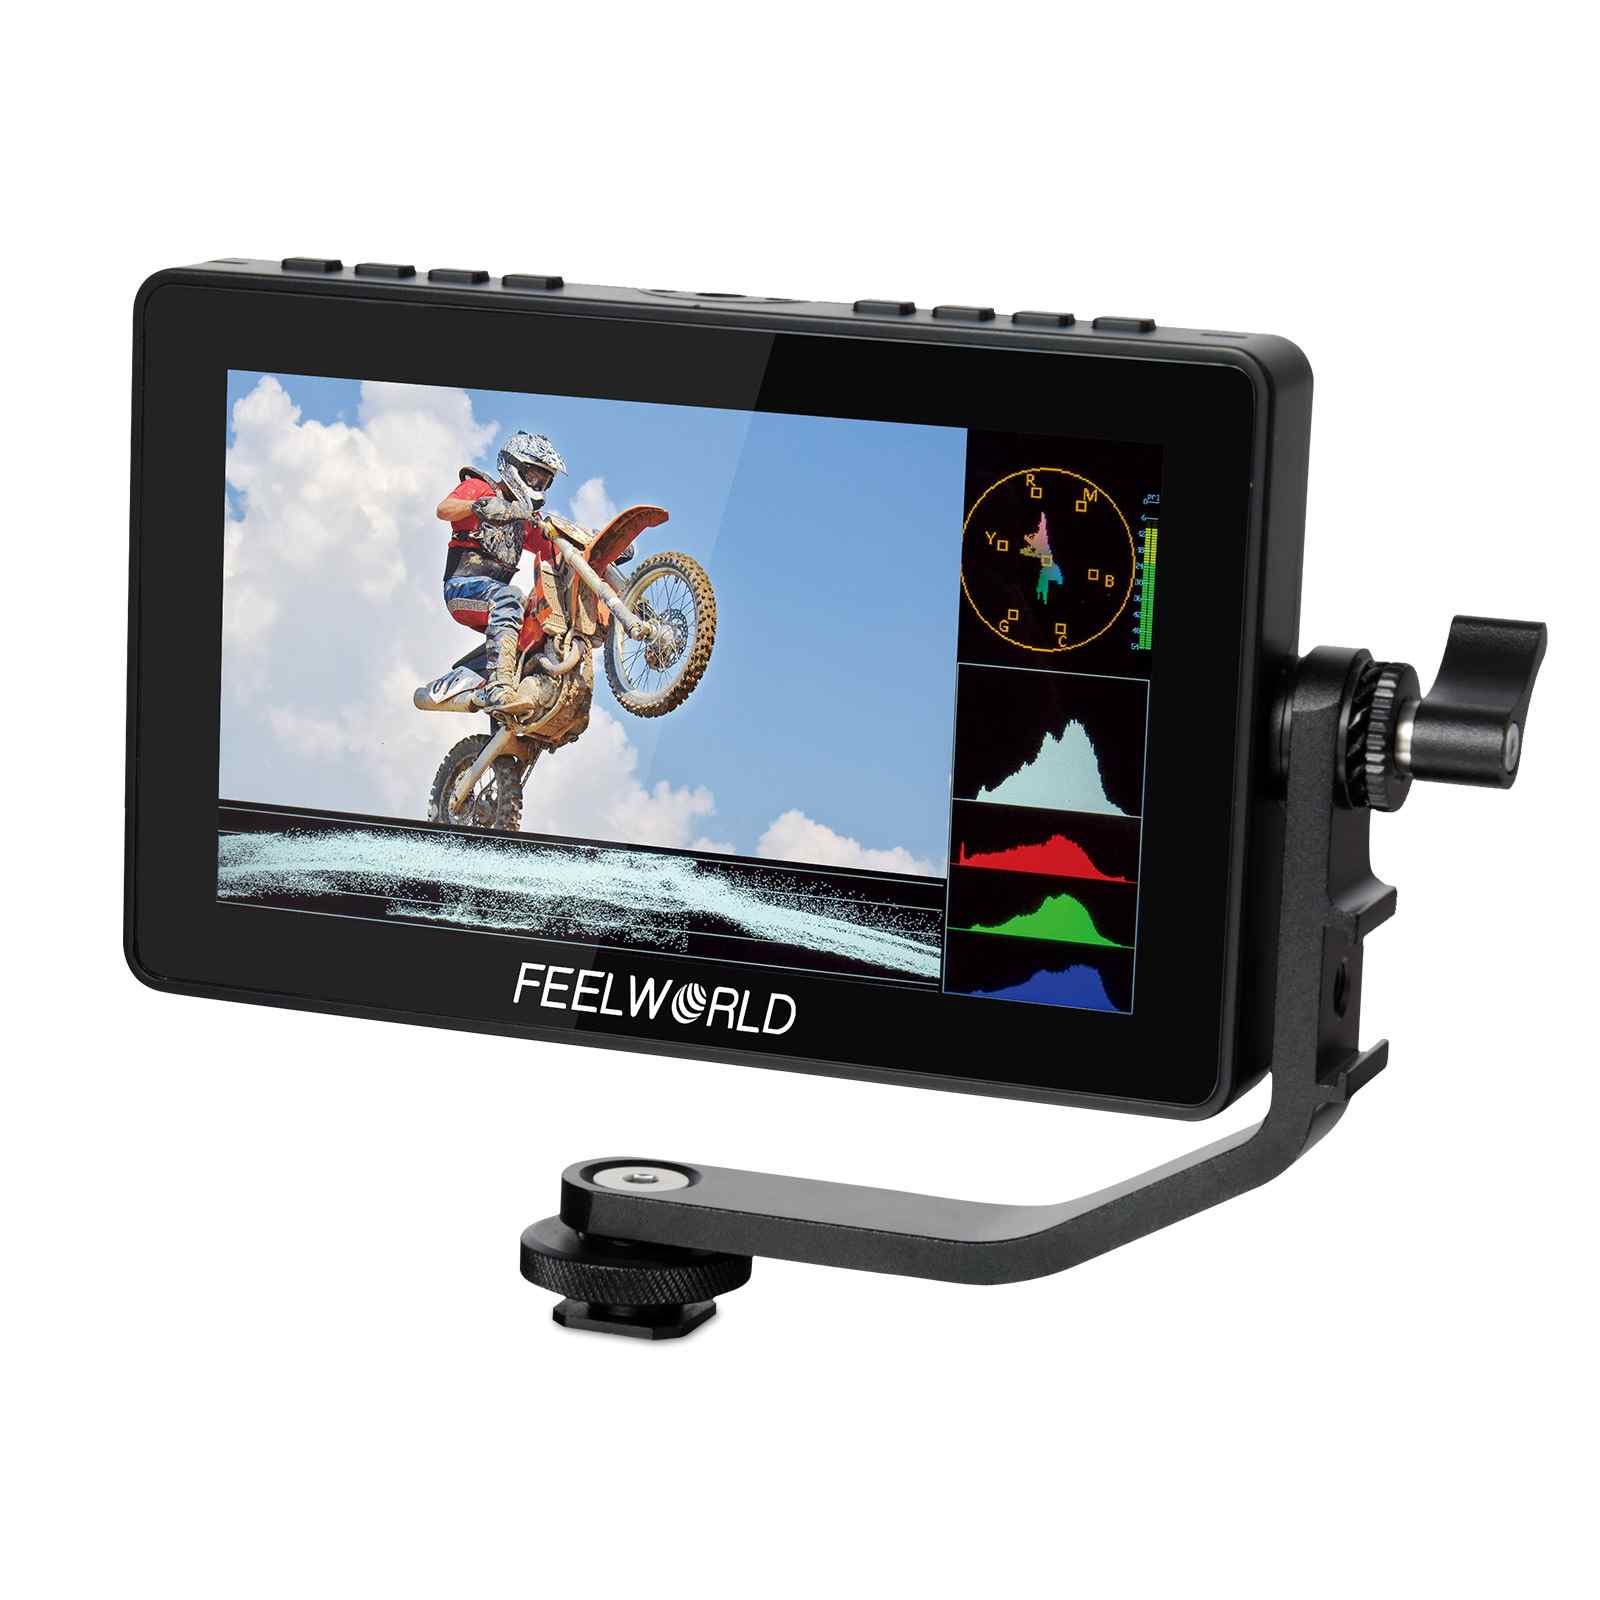 Feelworld 公式ストア: 低予算カメラ フィールド モニター – Feelworld 